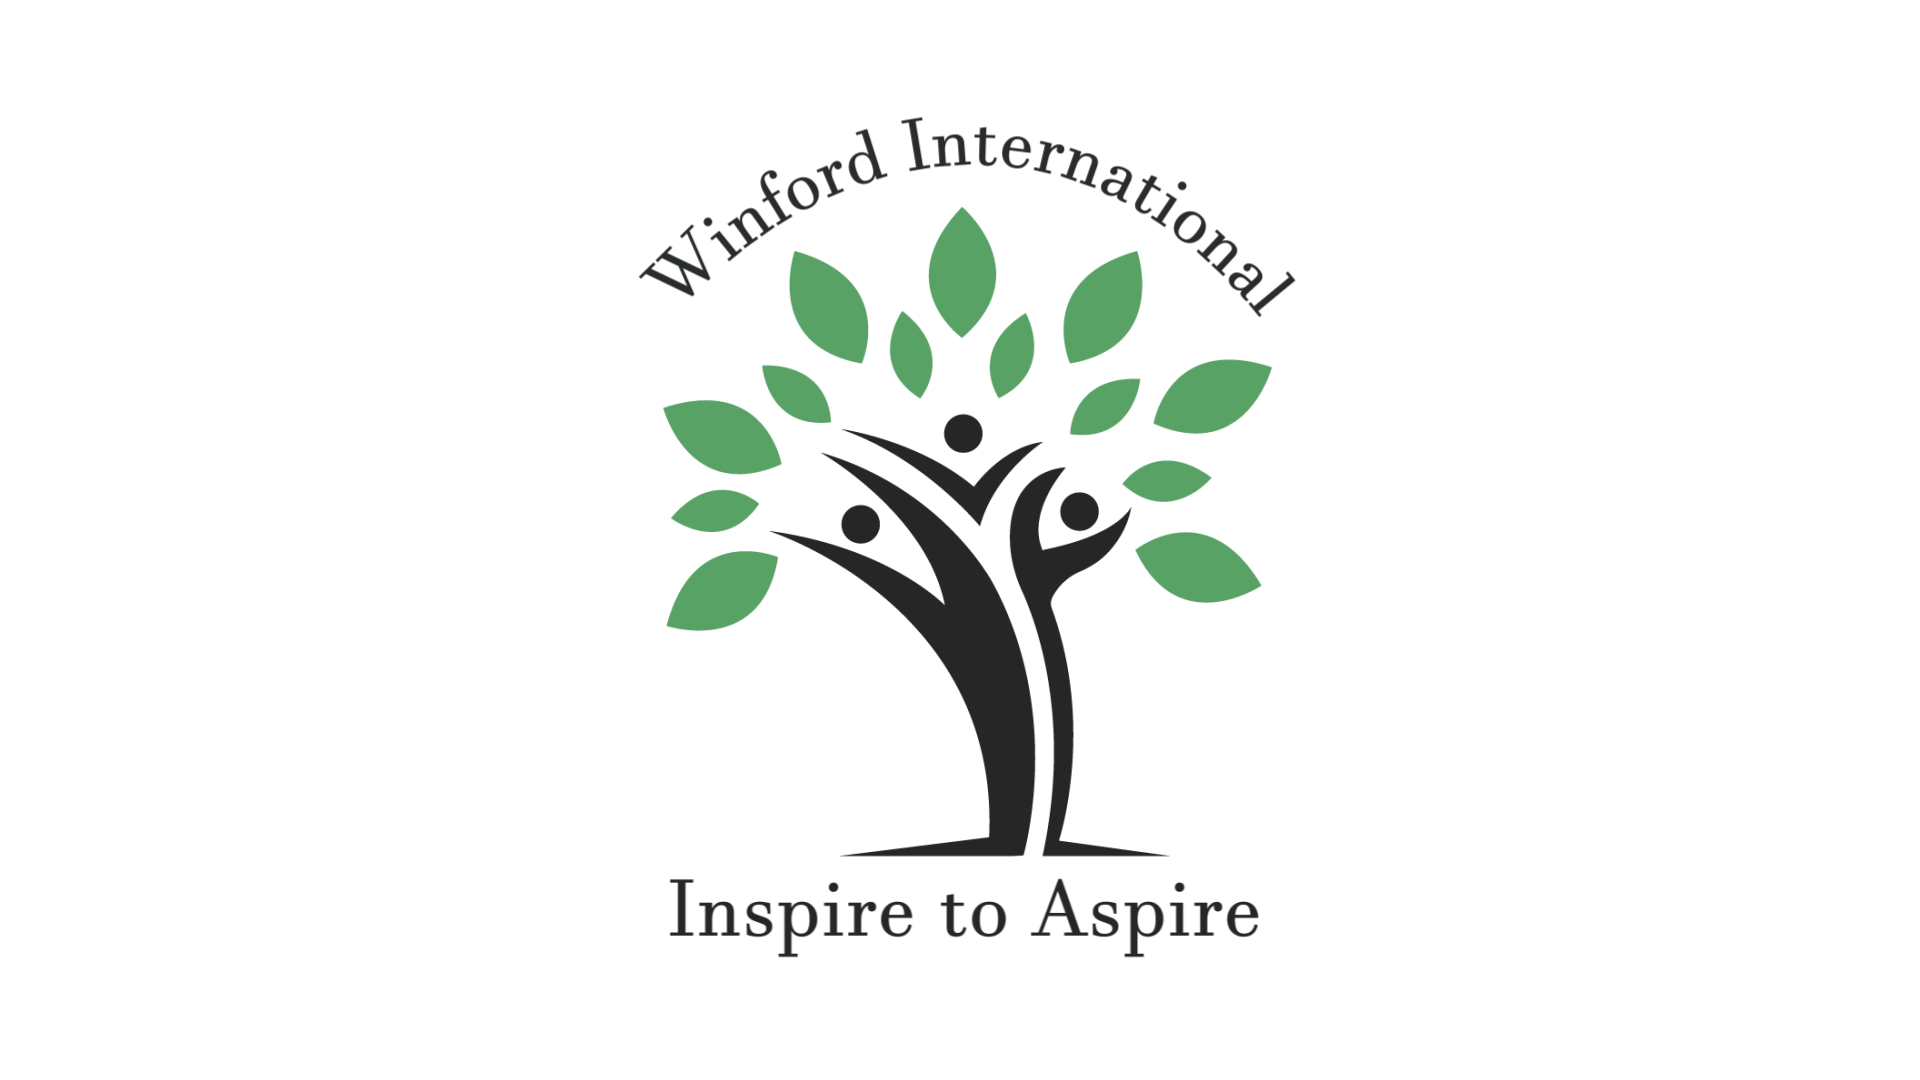 Winford International Online School logo